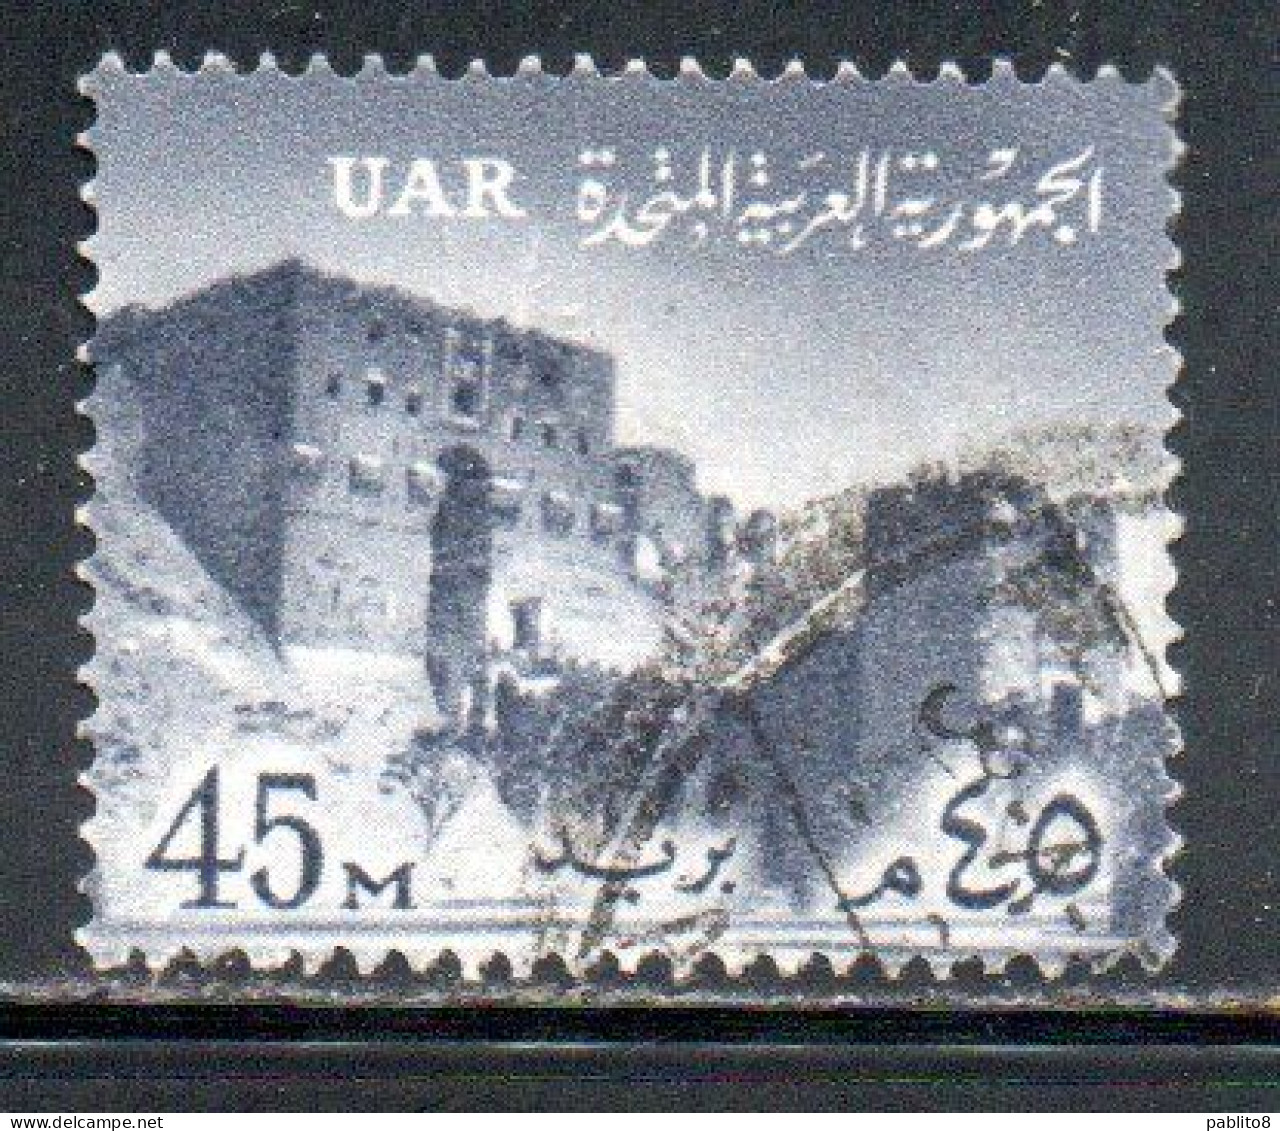 UAR EGYPT EGITTO 1959 1960 SALADIN'S CITADEL ALEPPO 45m USED USATO OBLITERE' - Used Stamps